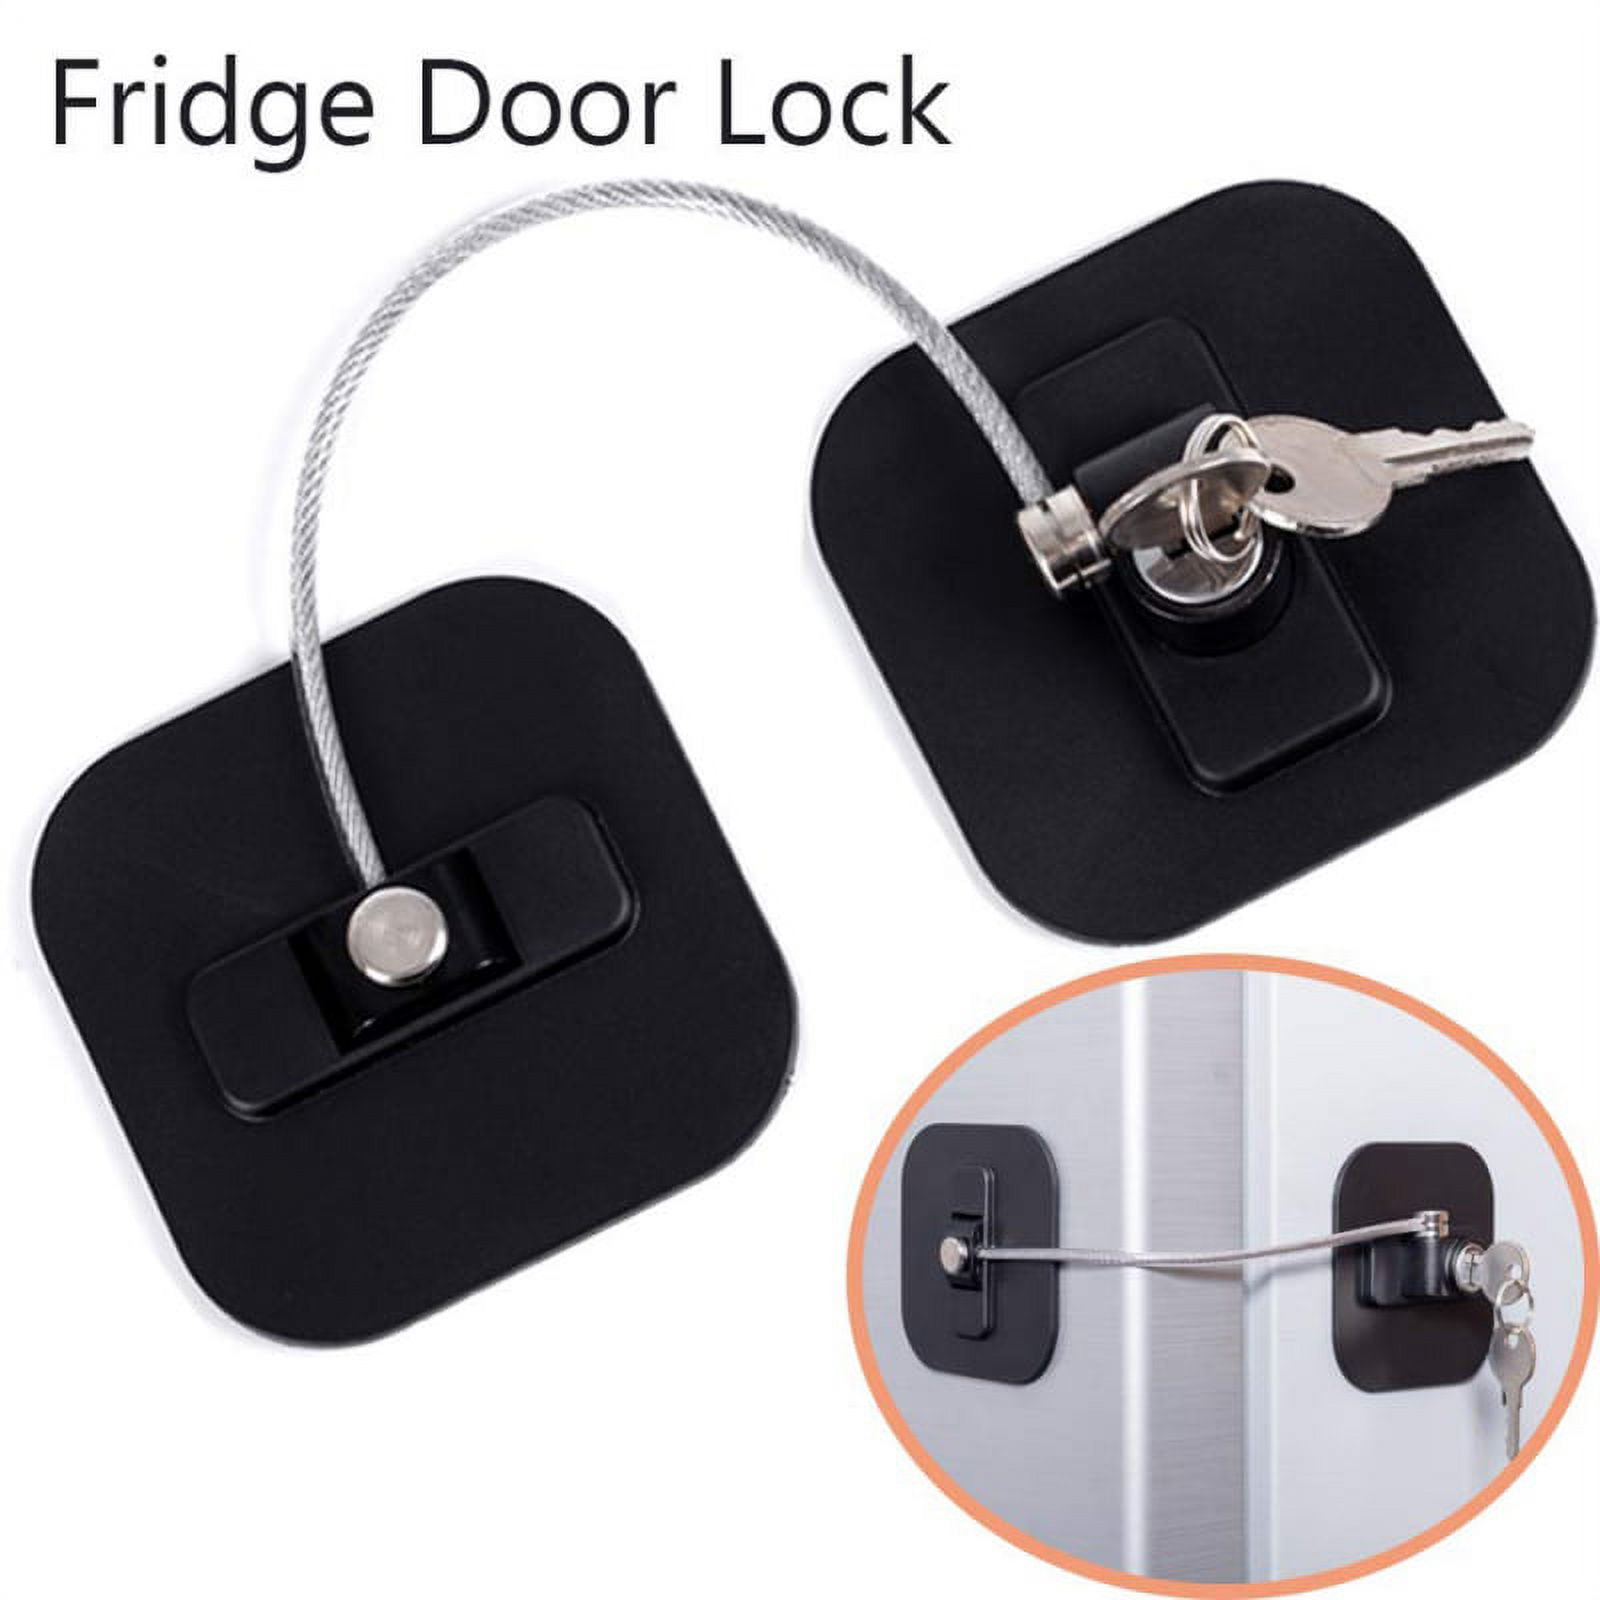 Locktrendz - Child Proof Fridge Locks for Kids, Strong Heavy Duty Child Safety Button Refrigerator Lock, Durable and Easy to Install Fridge Lock